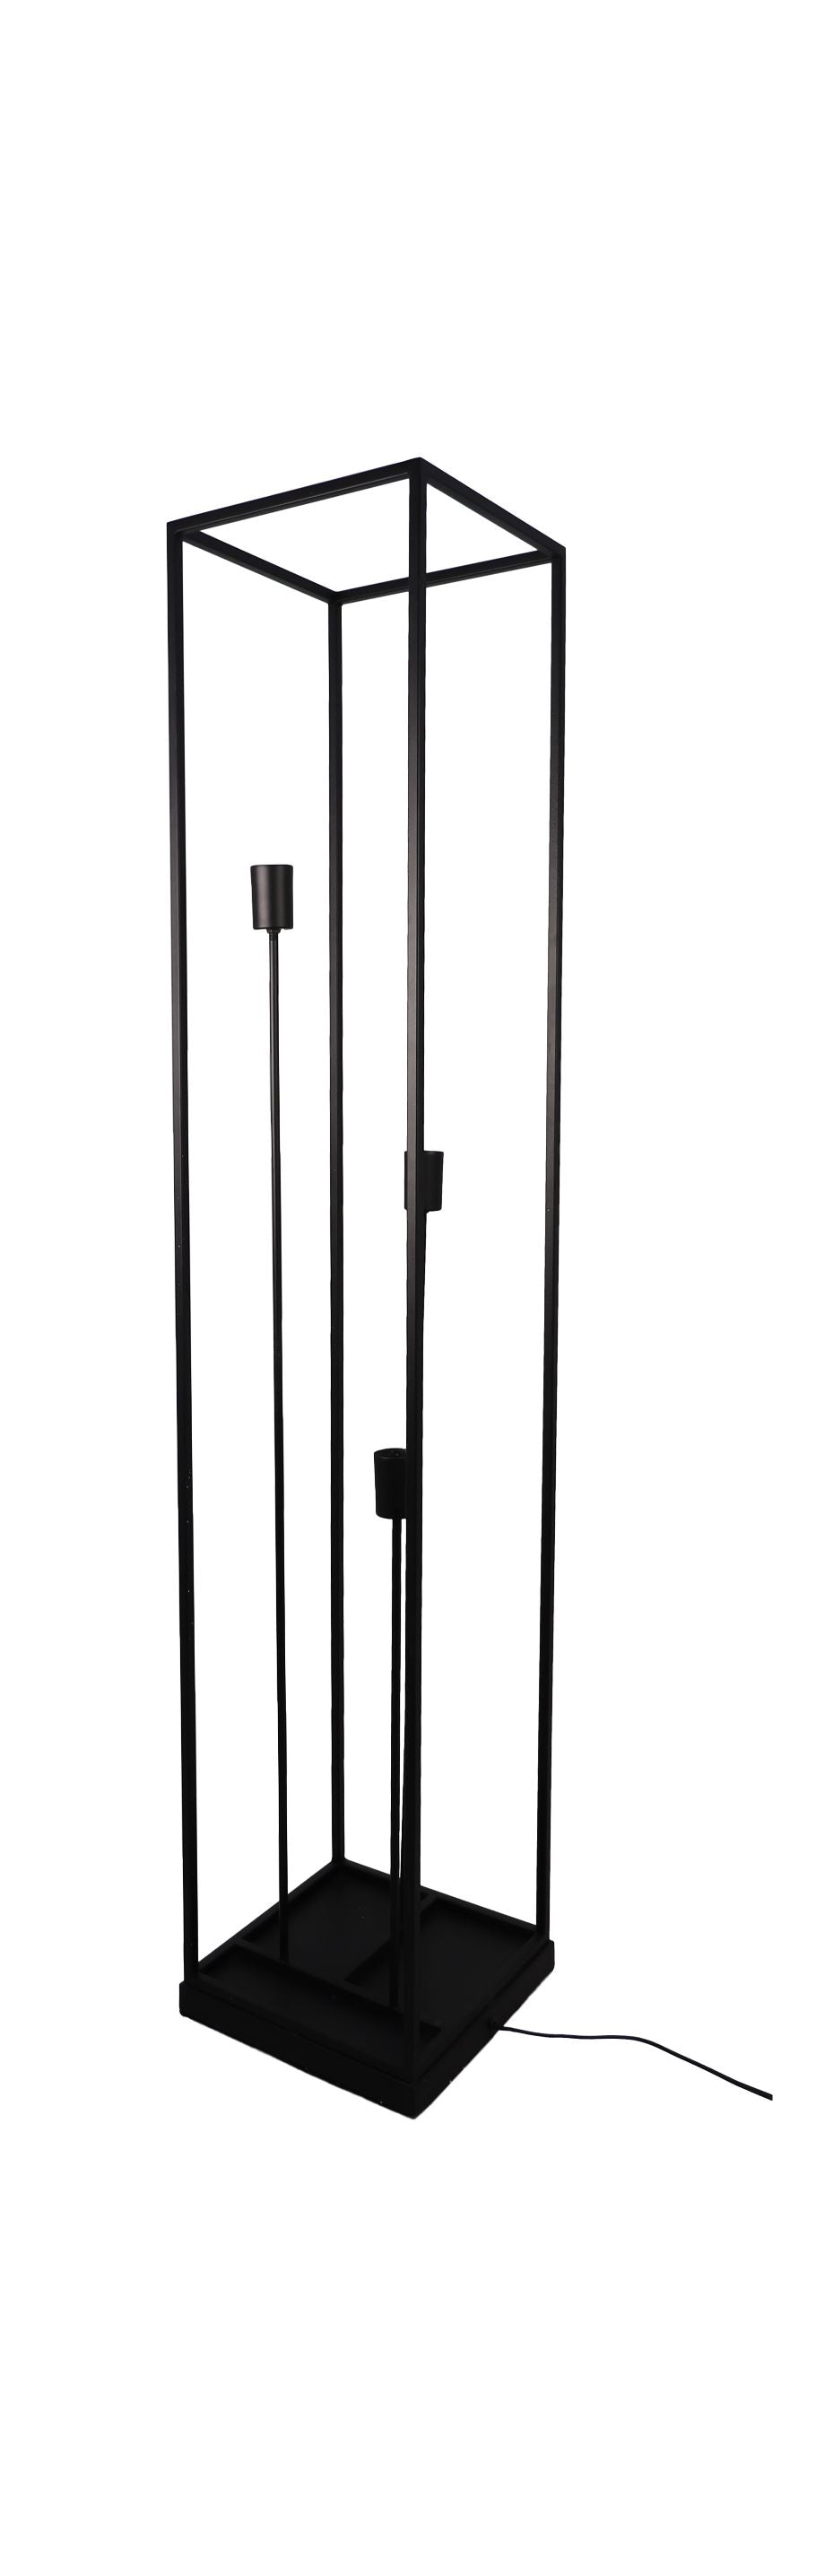 Vloerlamp Fremont open frame 3-lichts - 158 cm - Gepoedercoat zwart - Ijzer